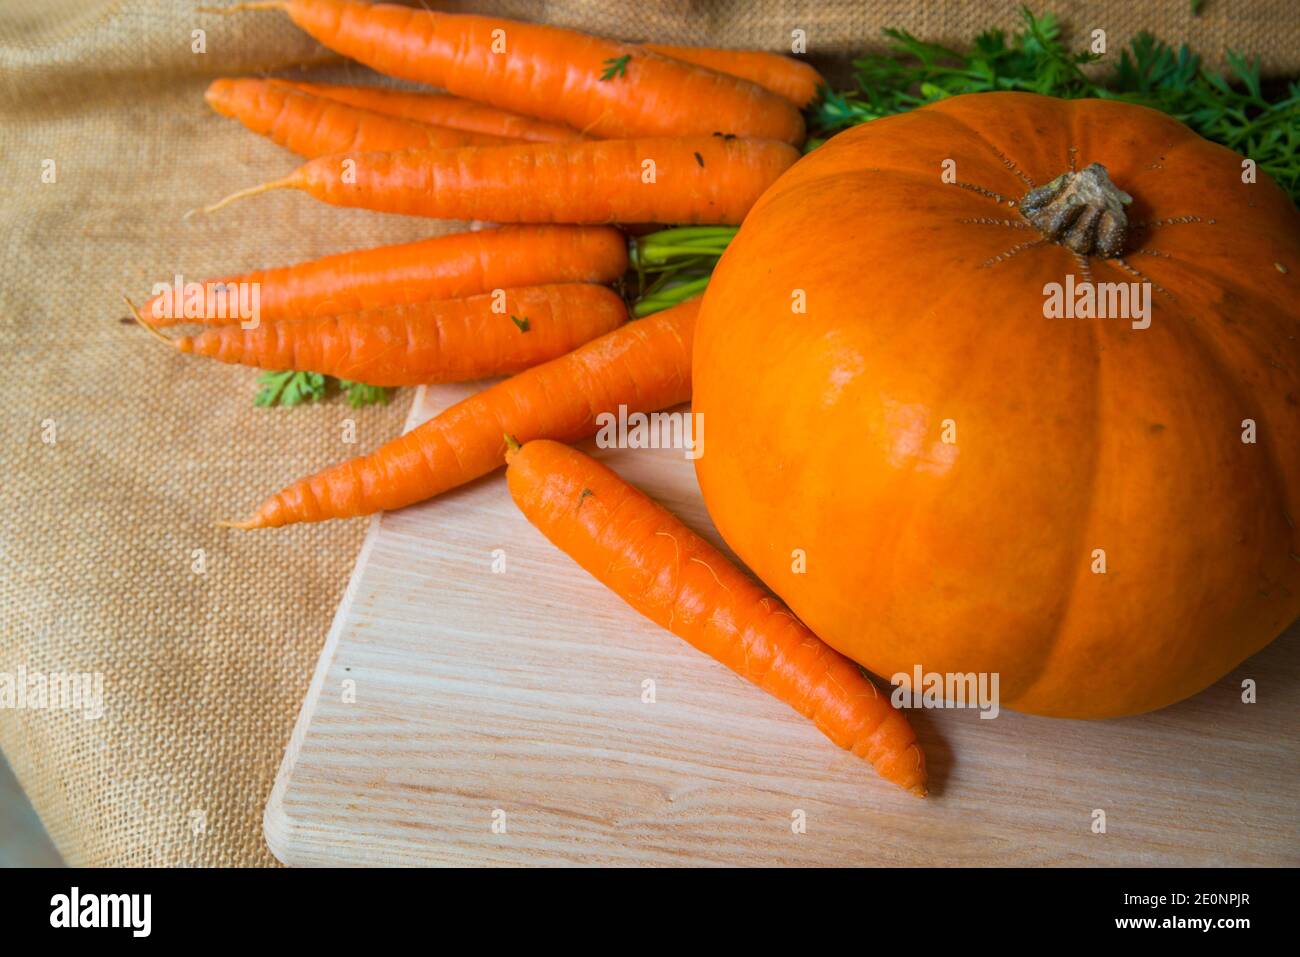 Pumpkin and carrots. Stock Photo